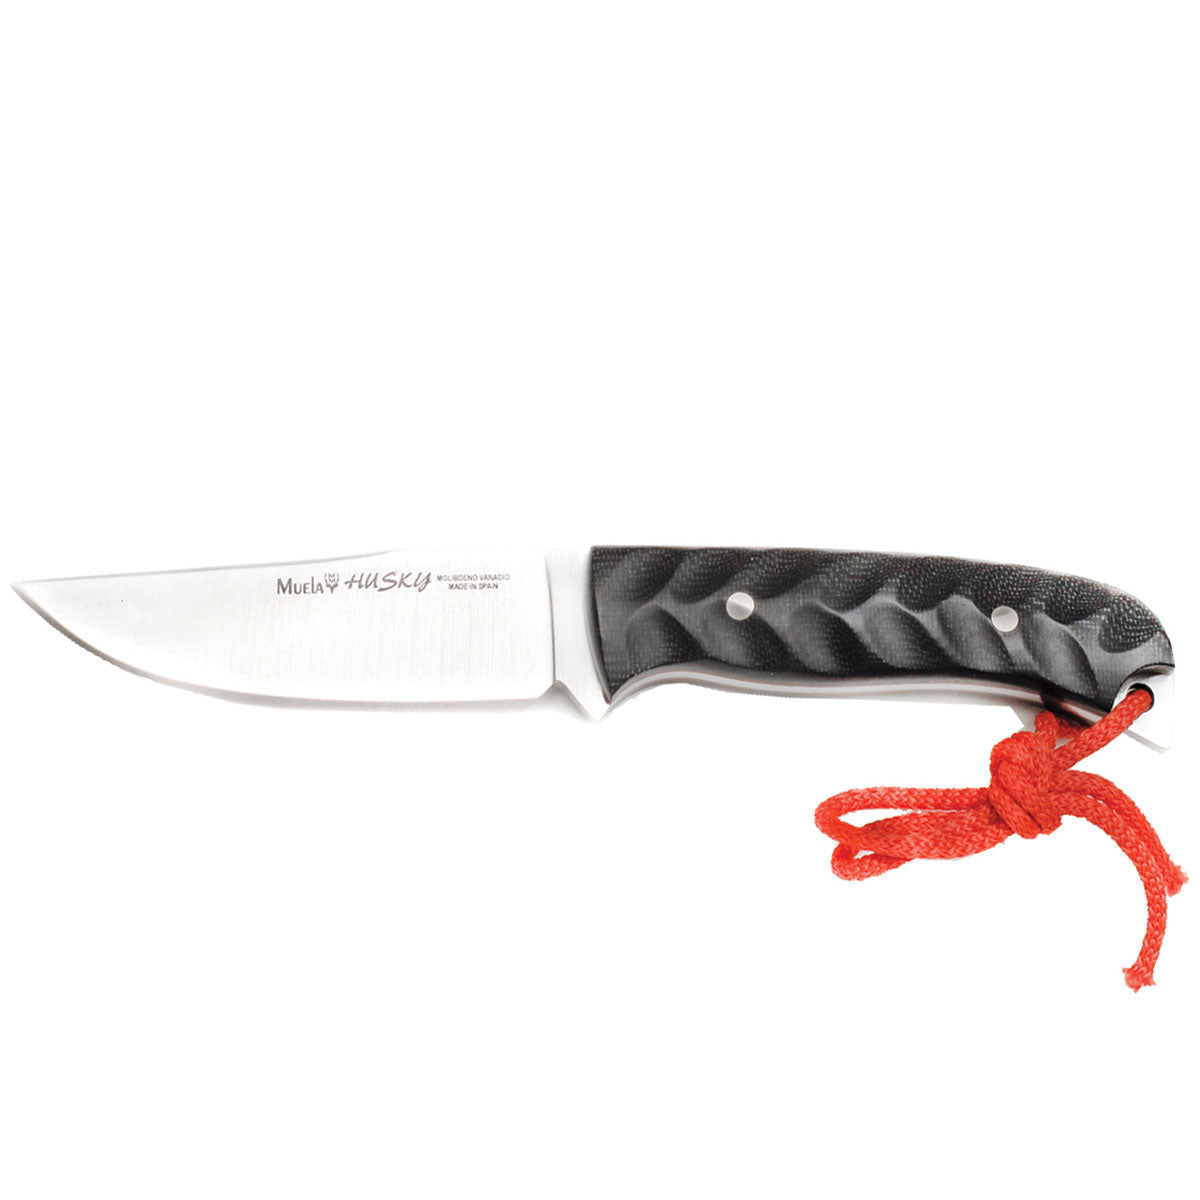 Muela | HUSKY Knife -10M - Black Handle